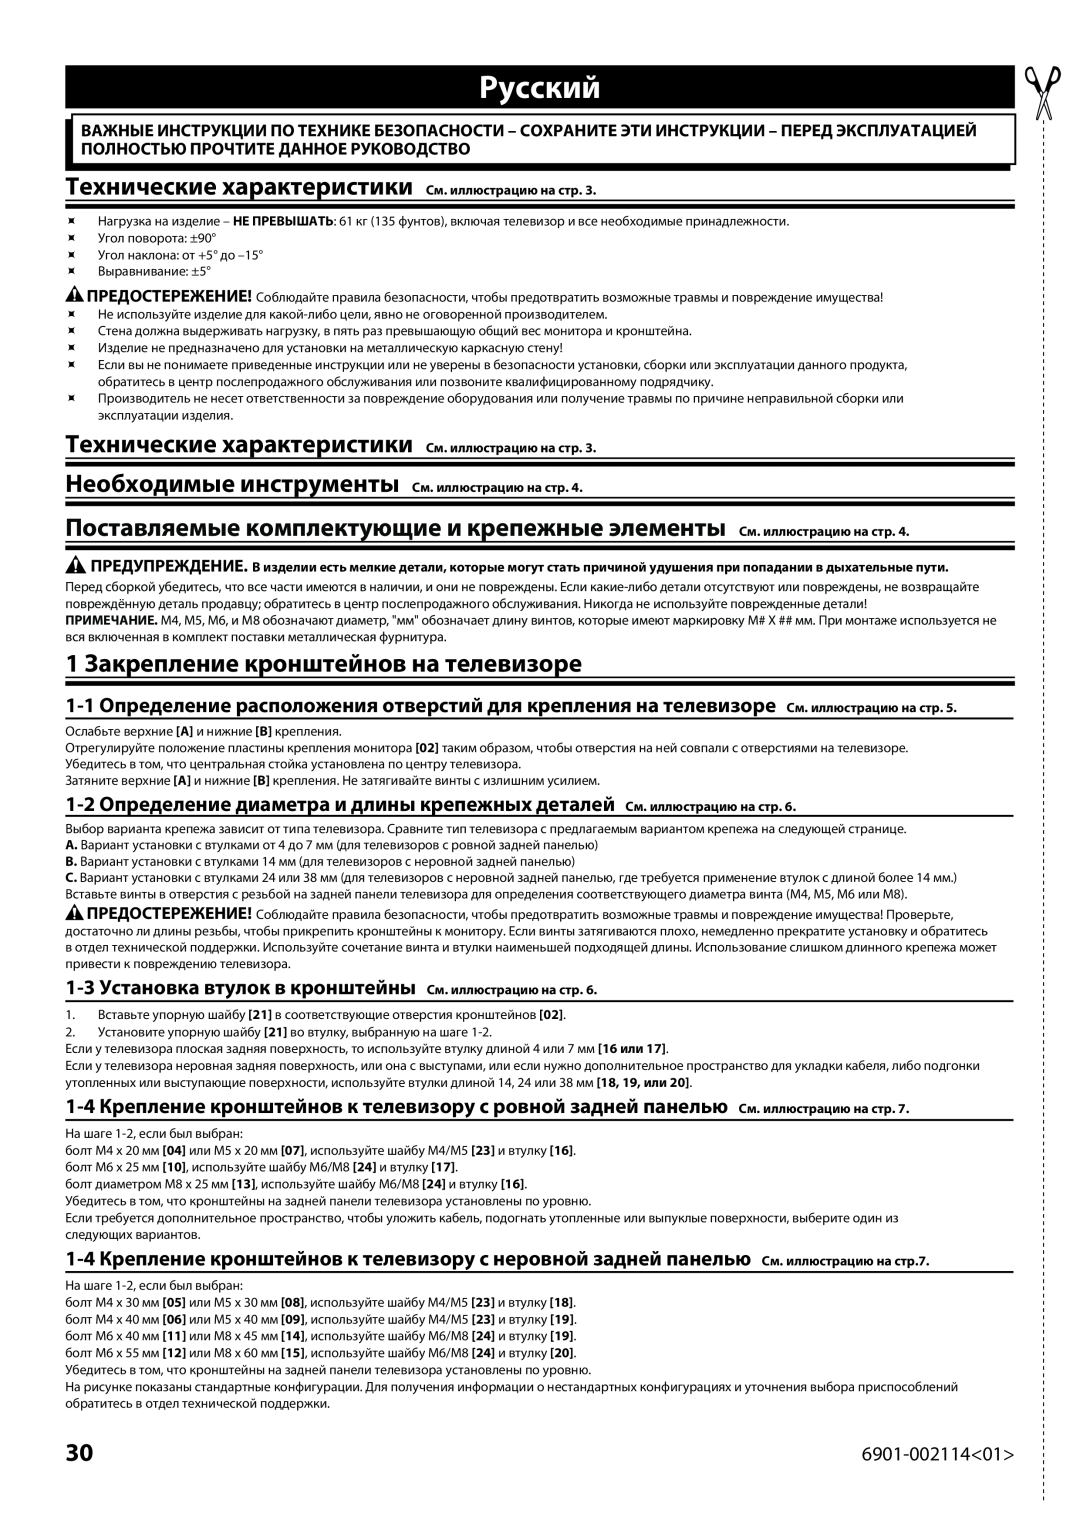 Sanus Systems LF228 instruction manual Русский, 1 Закрепление кронштейнов на телевизоре 